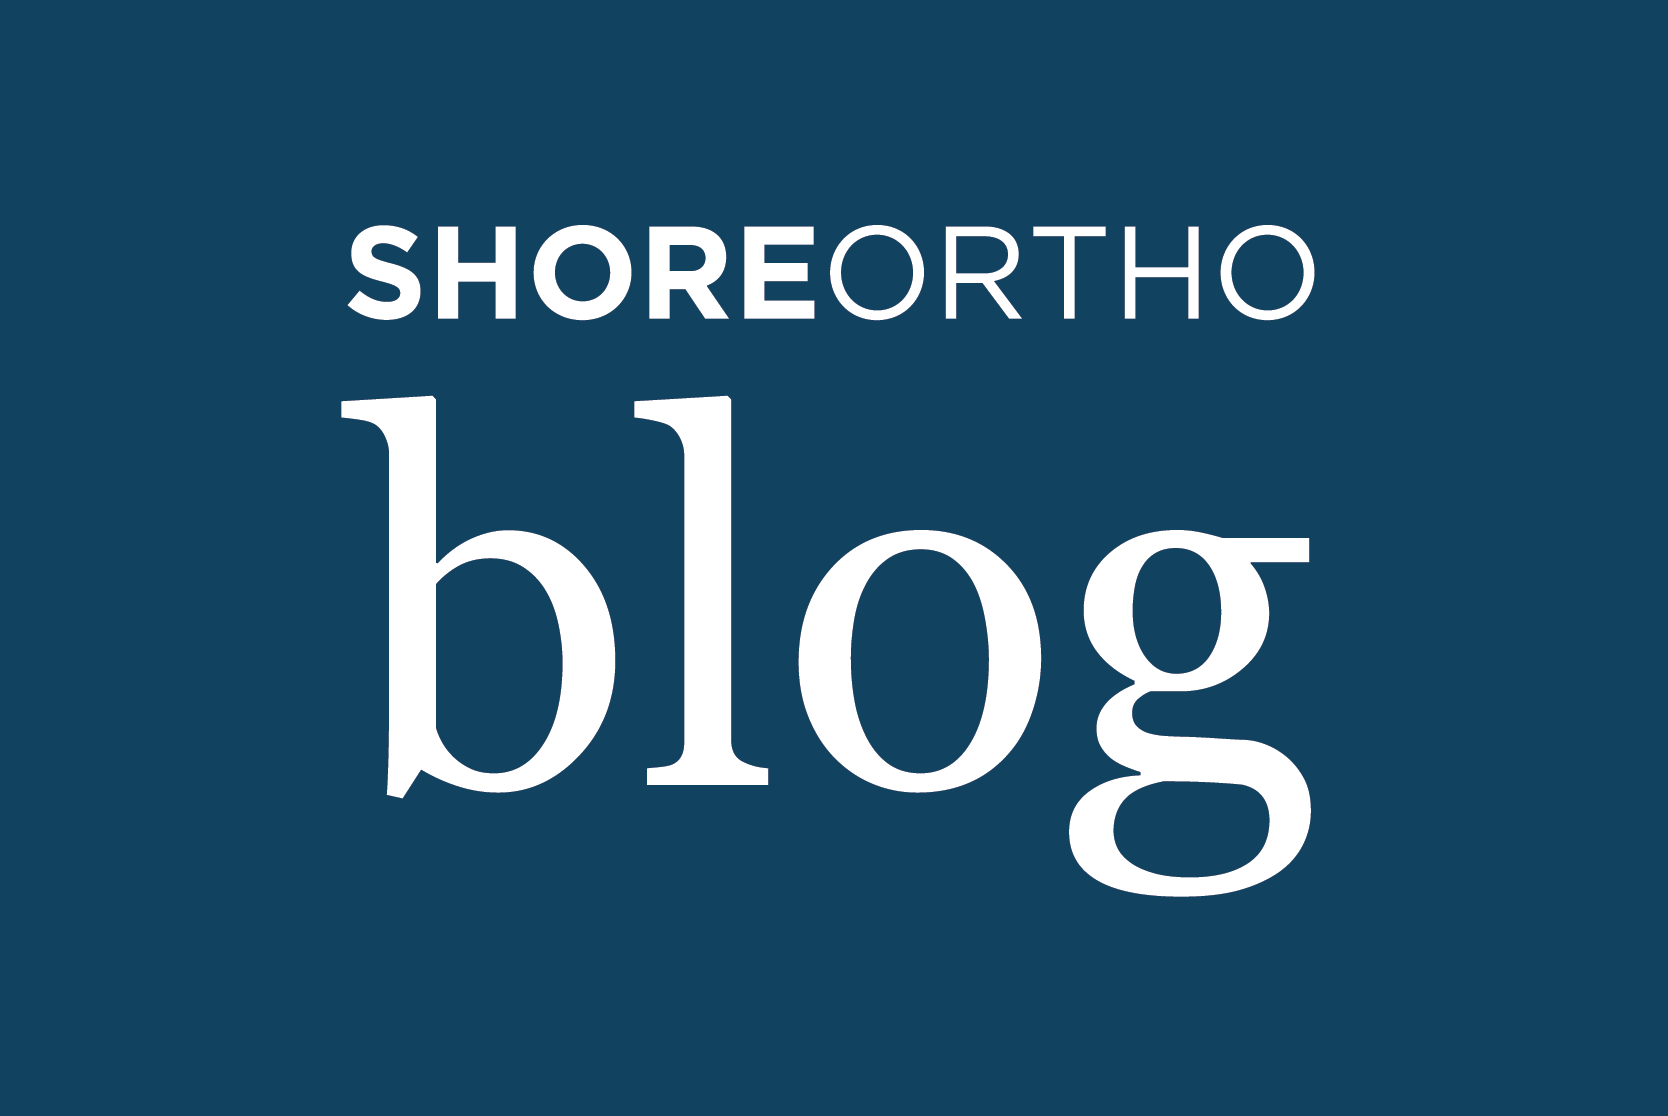 Shore Ortho Blog